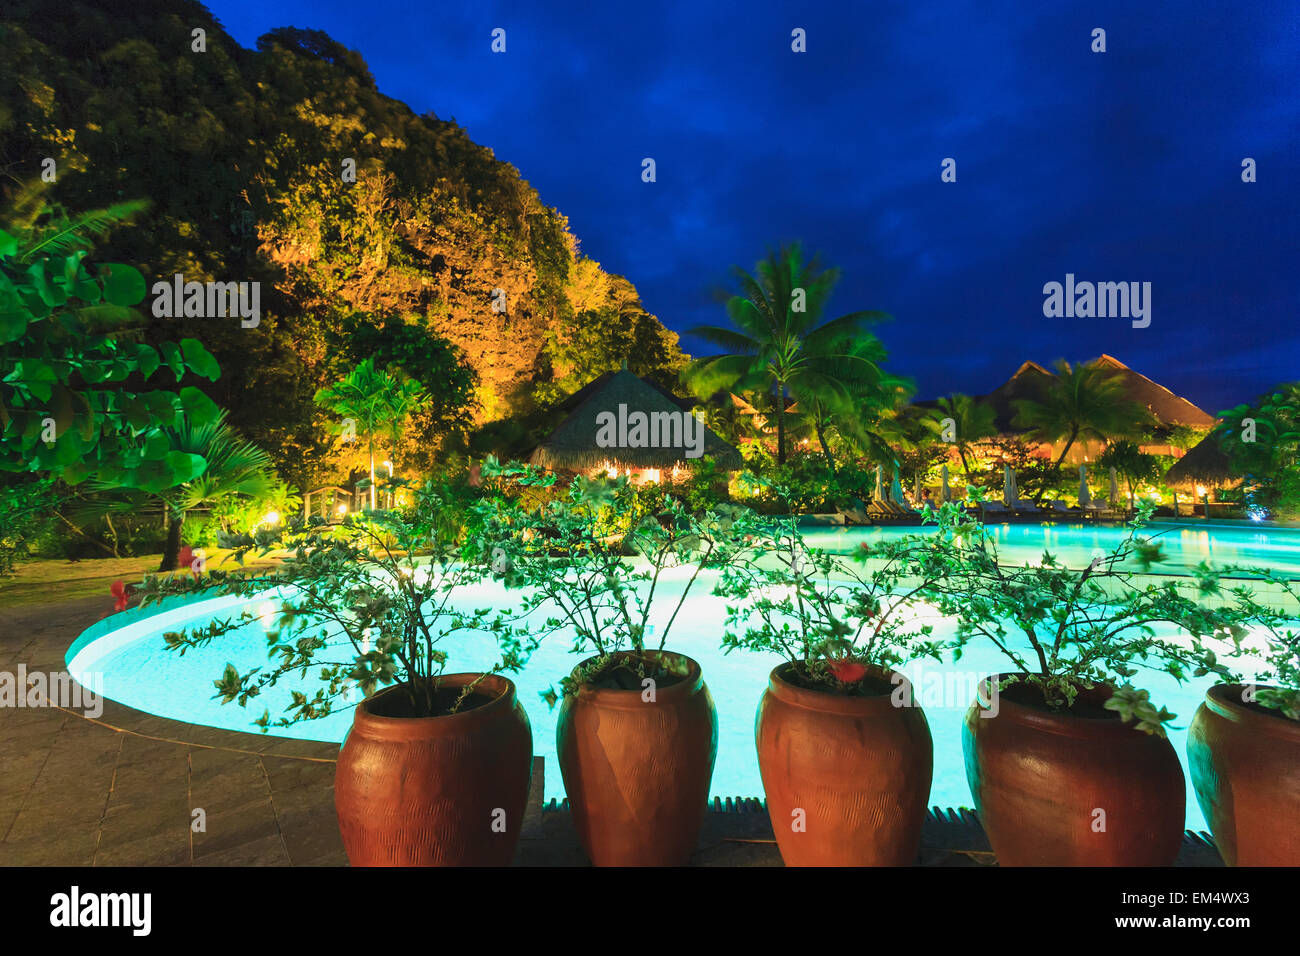 Pflanzen In Töpfen entlang Pool Bora Bora Nui Resort & Spa Bora Bora Insel Gesellschaftsinseln Französisch-Polynesien Südpazifik Stockfoto